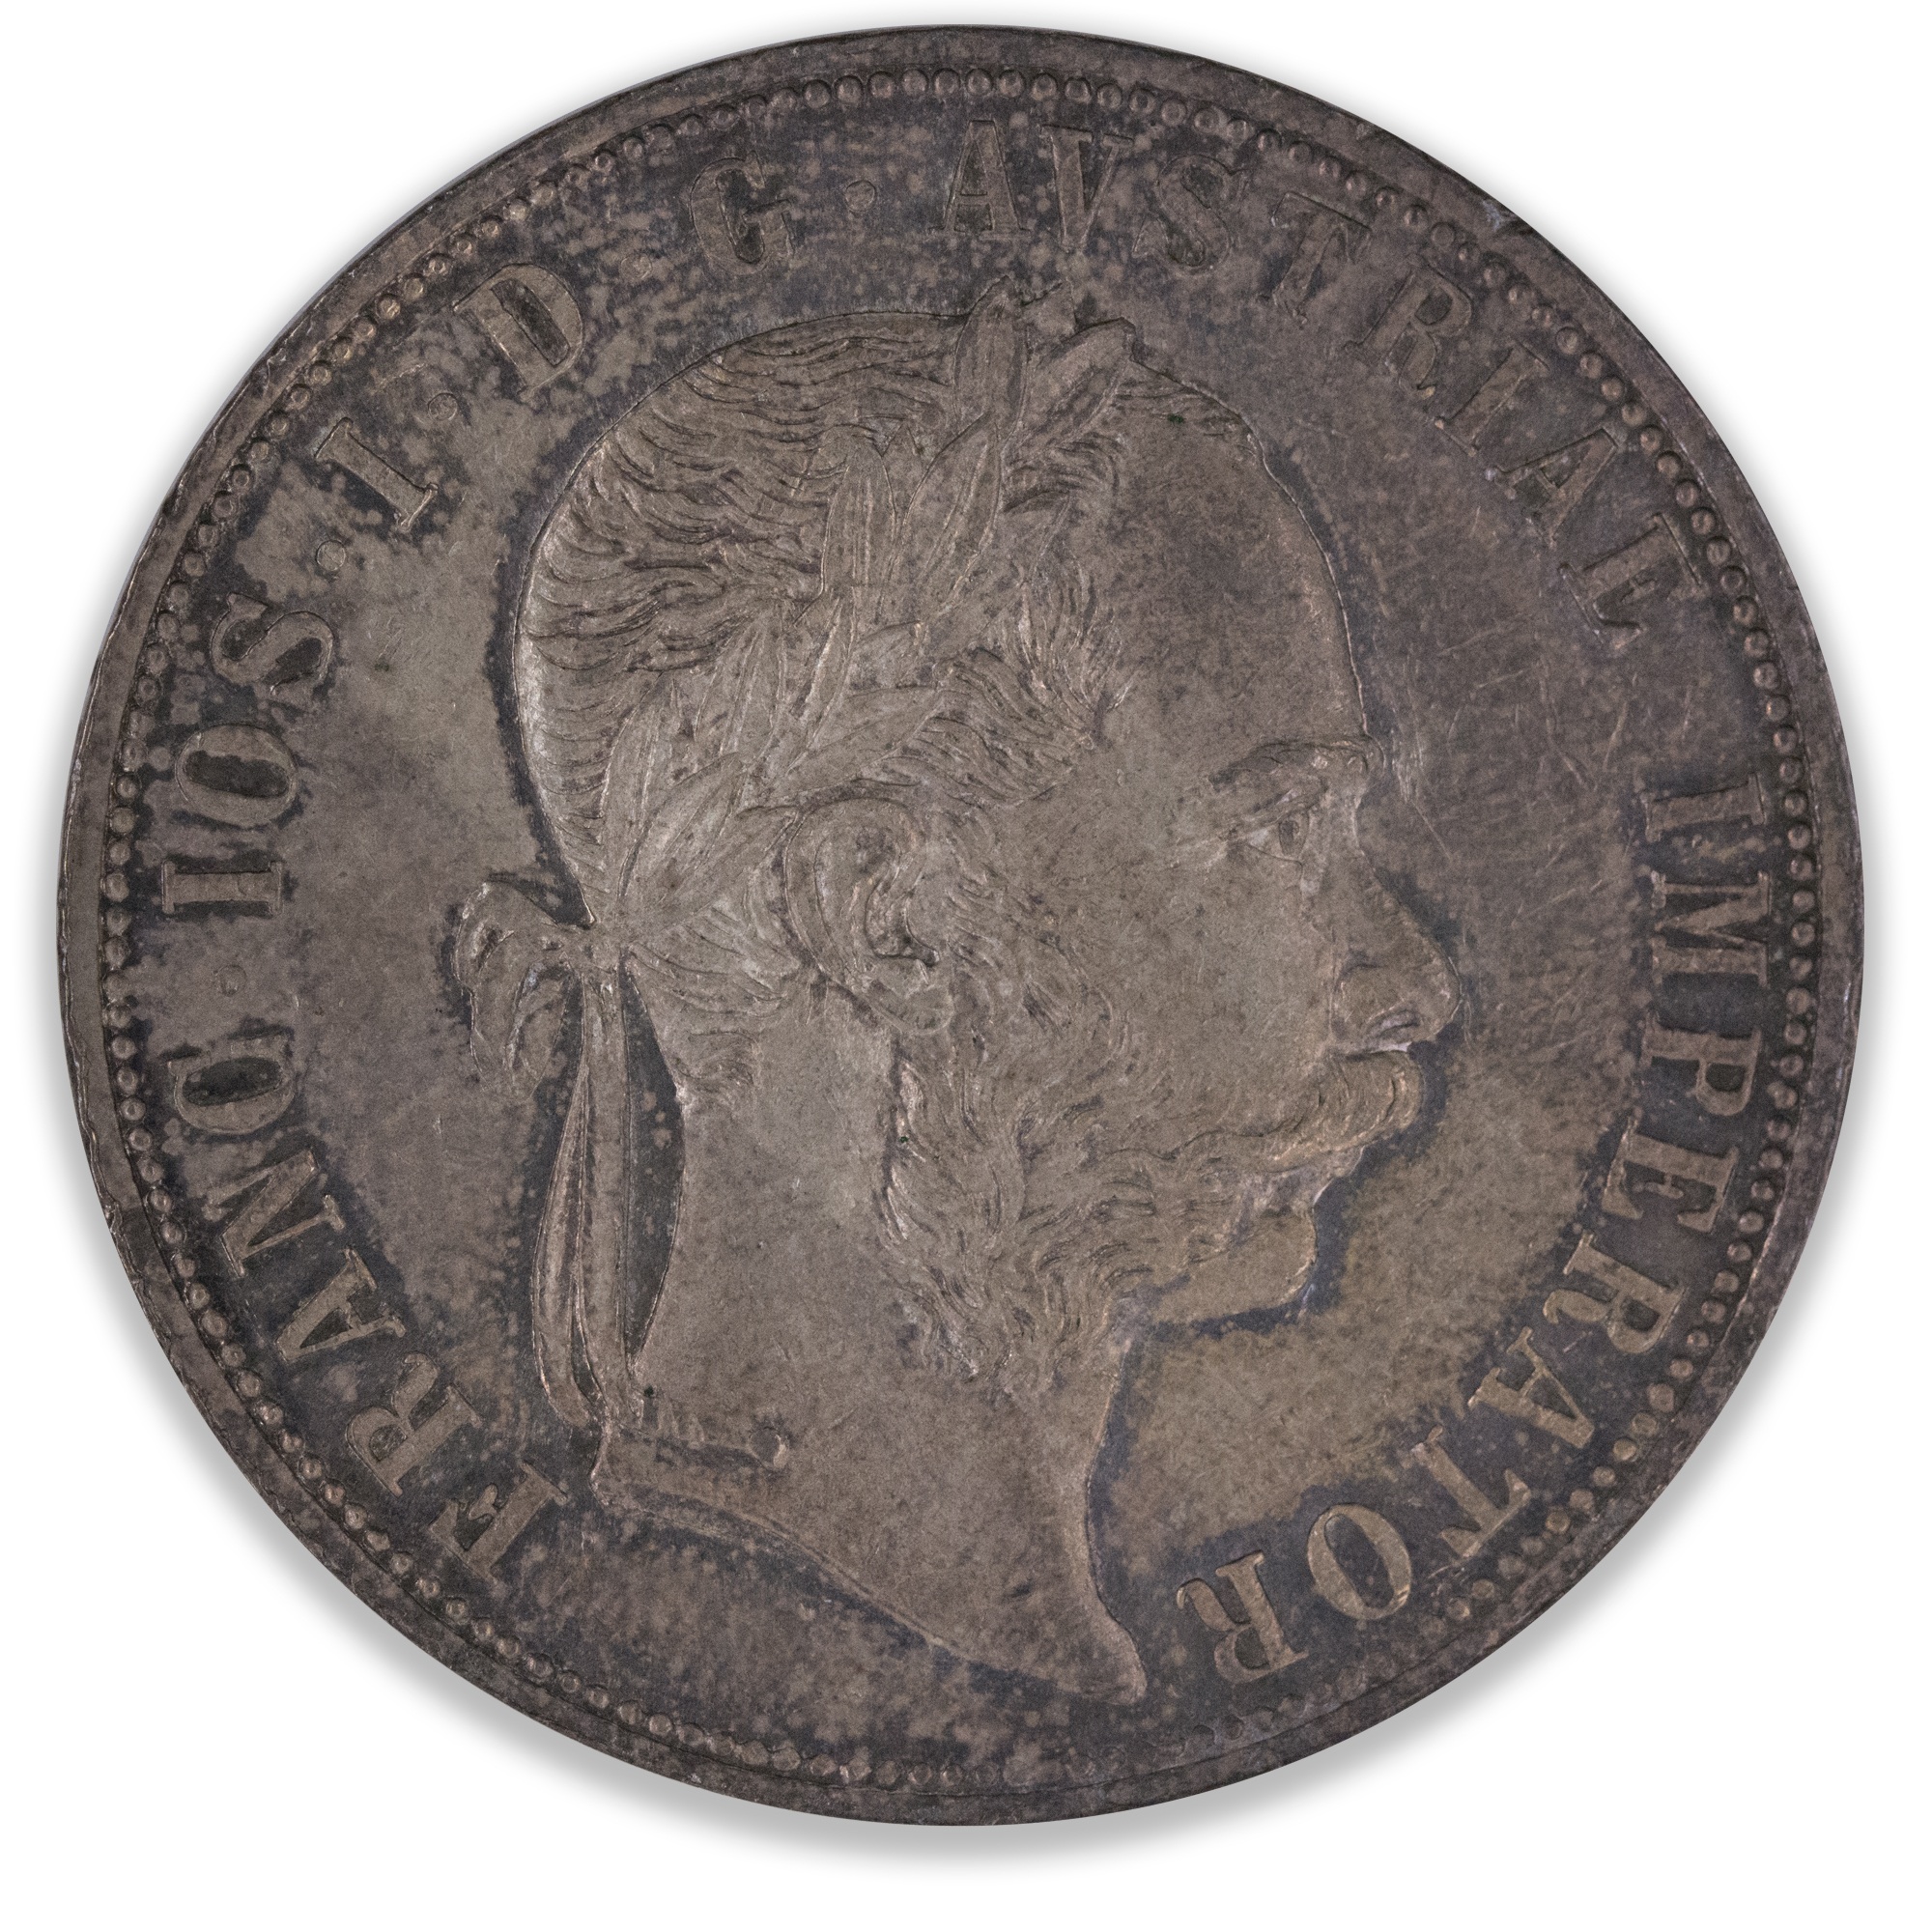 1872 Austria 2 Gulden Good Extra Fine/About Uncirculated